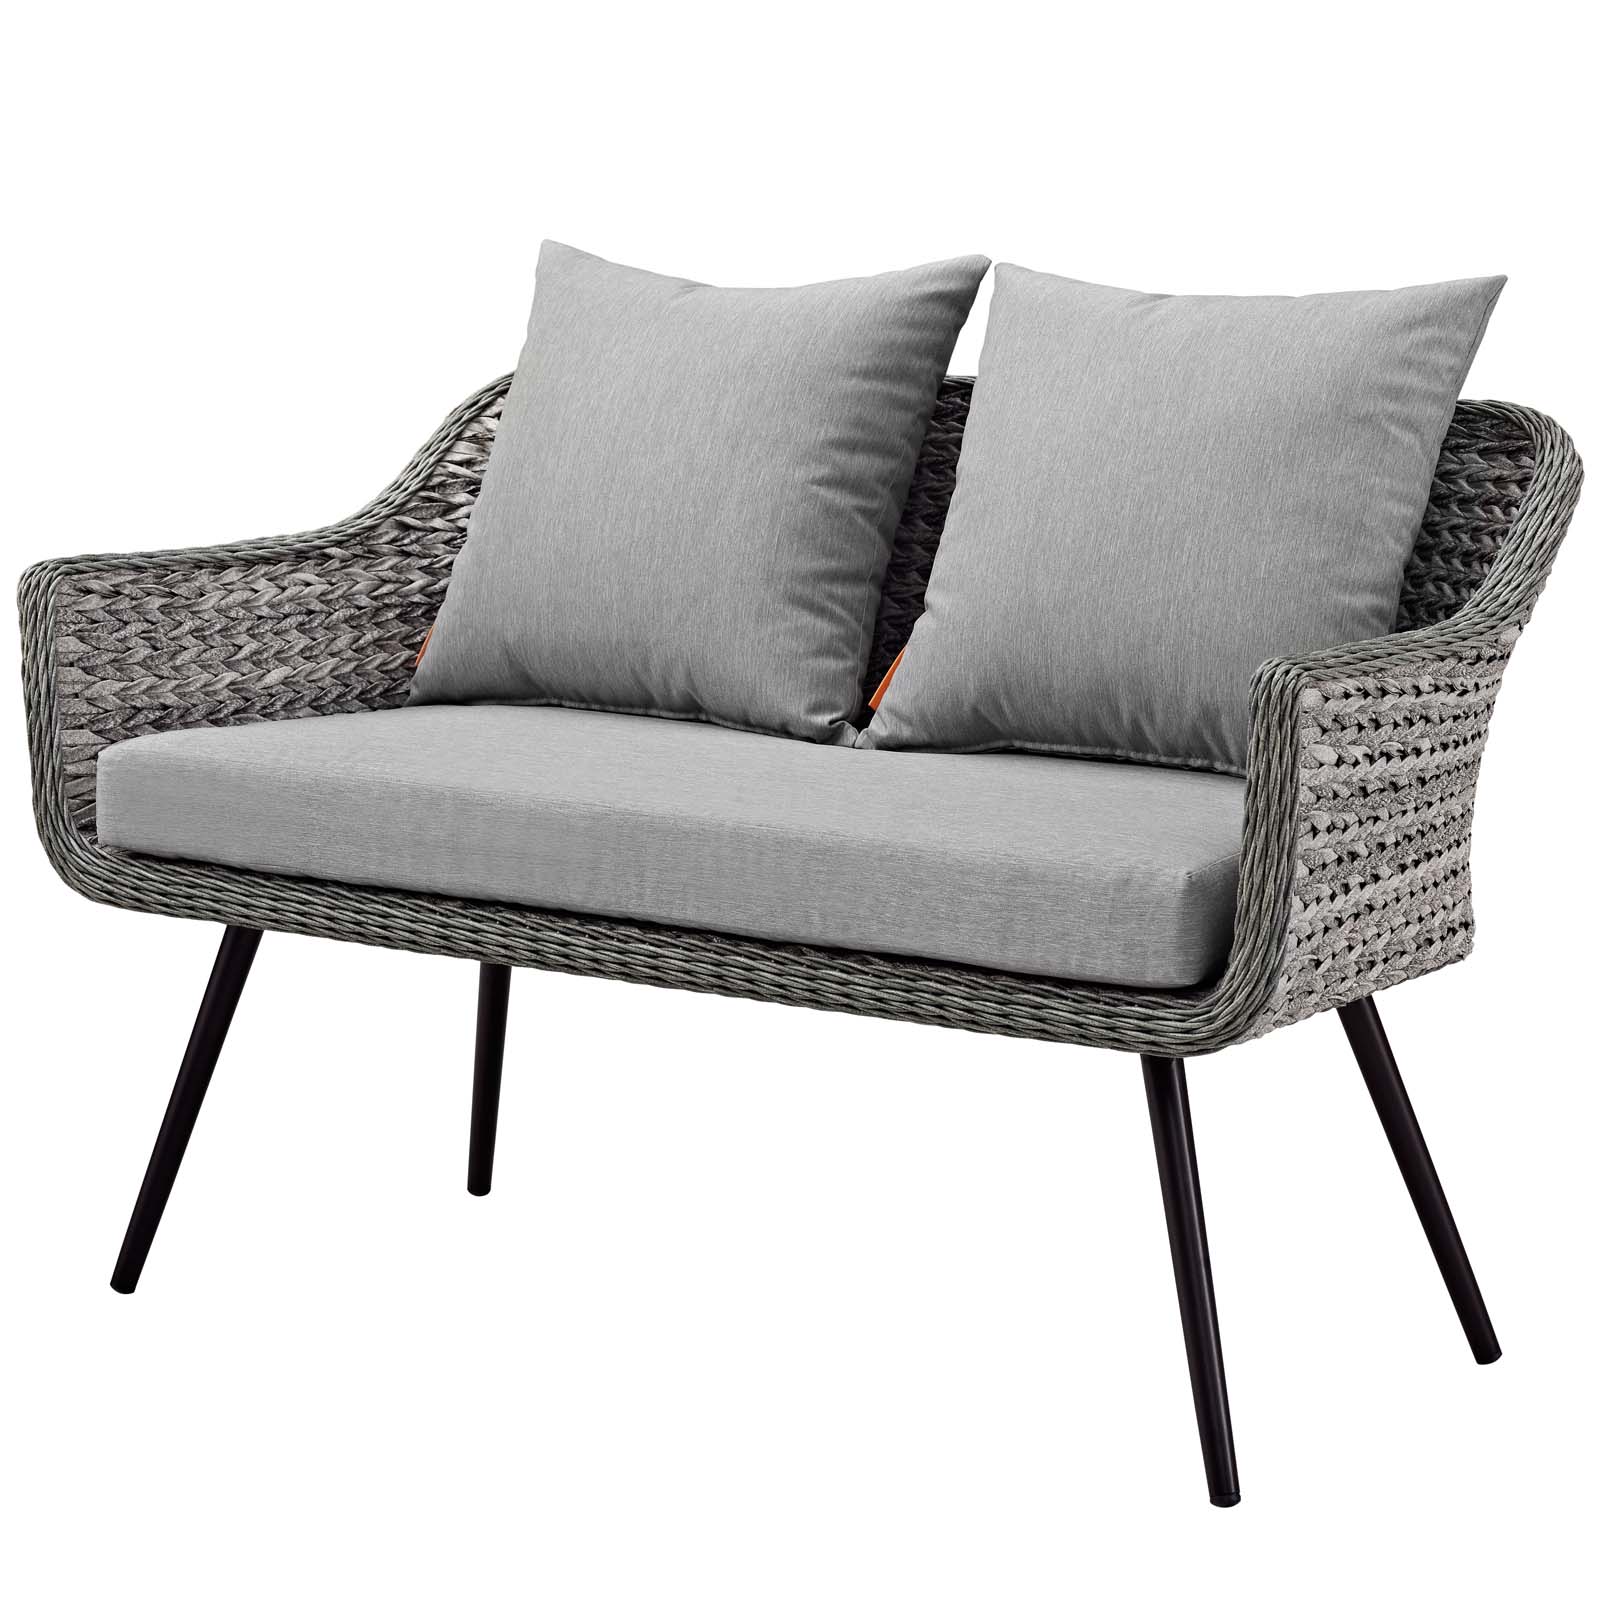 Contemporary Modern Urban Designer Outdoor Patio Balcony Garden Furniture Lounge Sofa, Chair and Coffee Table Set, Aluminum Fabric Wicker Rattan, Grey Gray - image 3 of 9